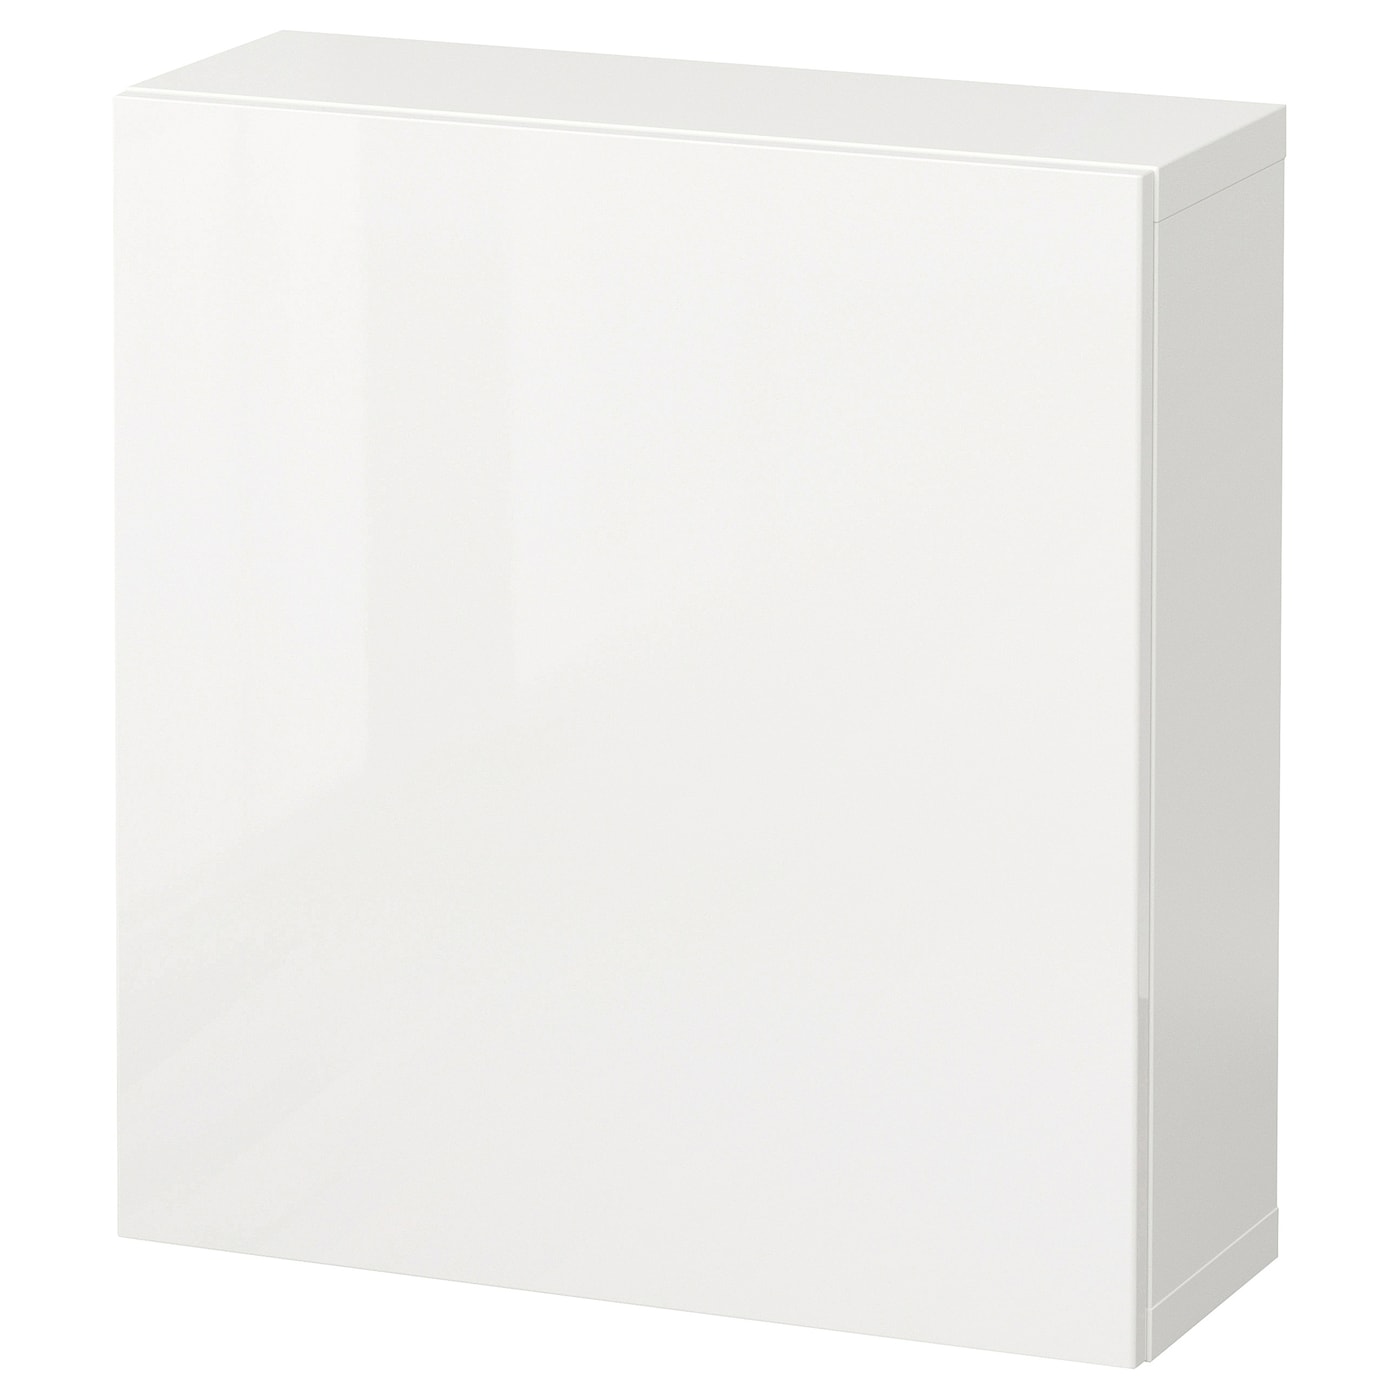 Настенный шкаф - IKEA BESTÅ/BESTA, 60x22x64 см, белый, БЕСТО ИКЕА